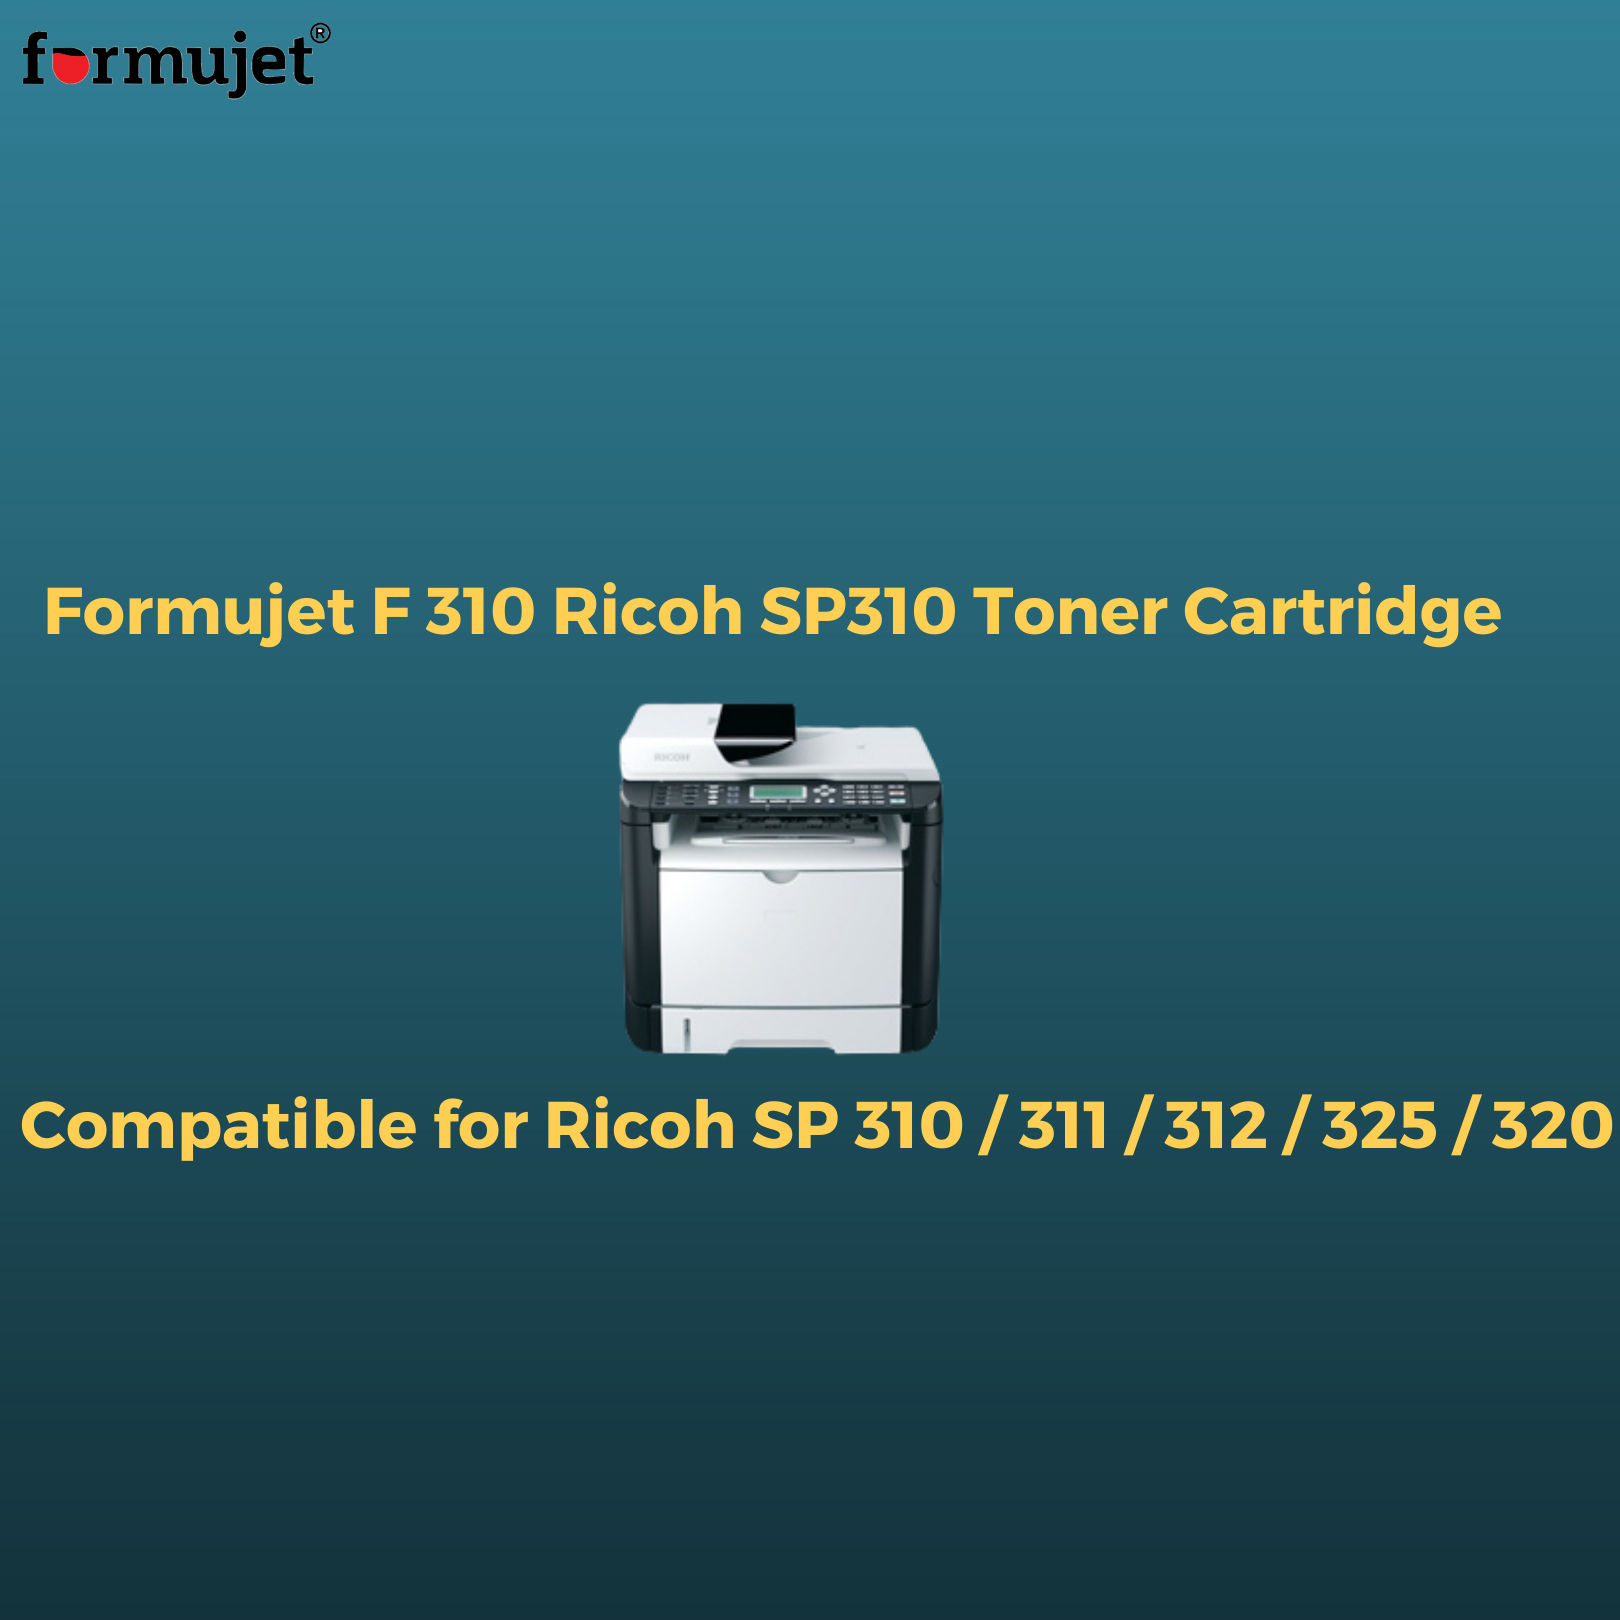 Formujet F 310 Ricoh SP310 Toner Cartridge Compatible for Ricoh